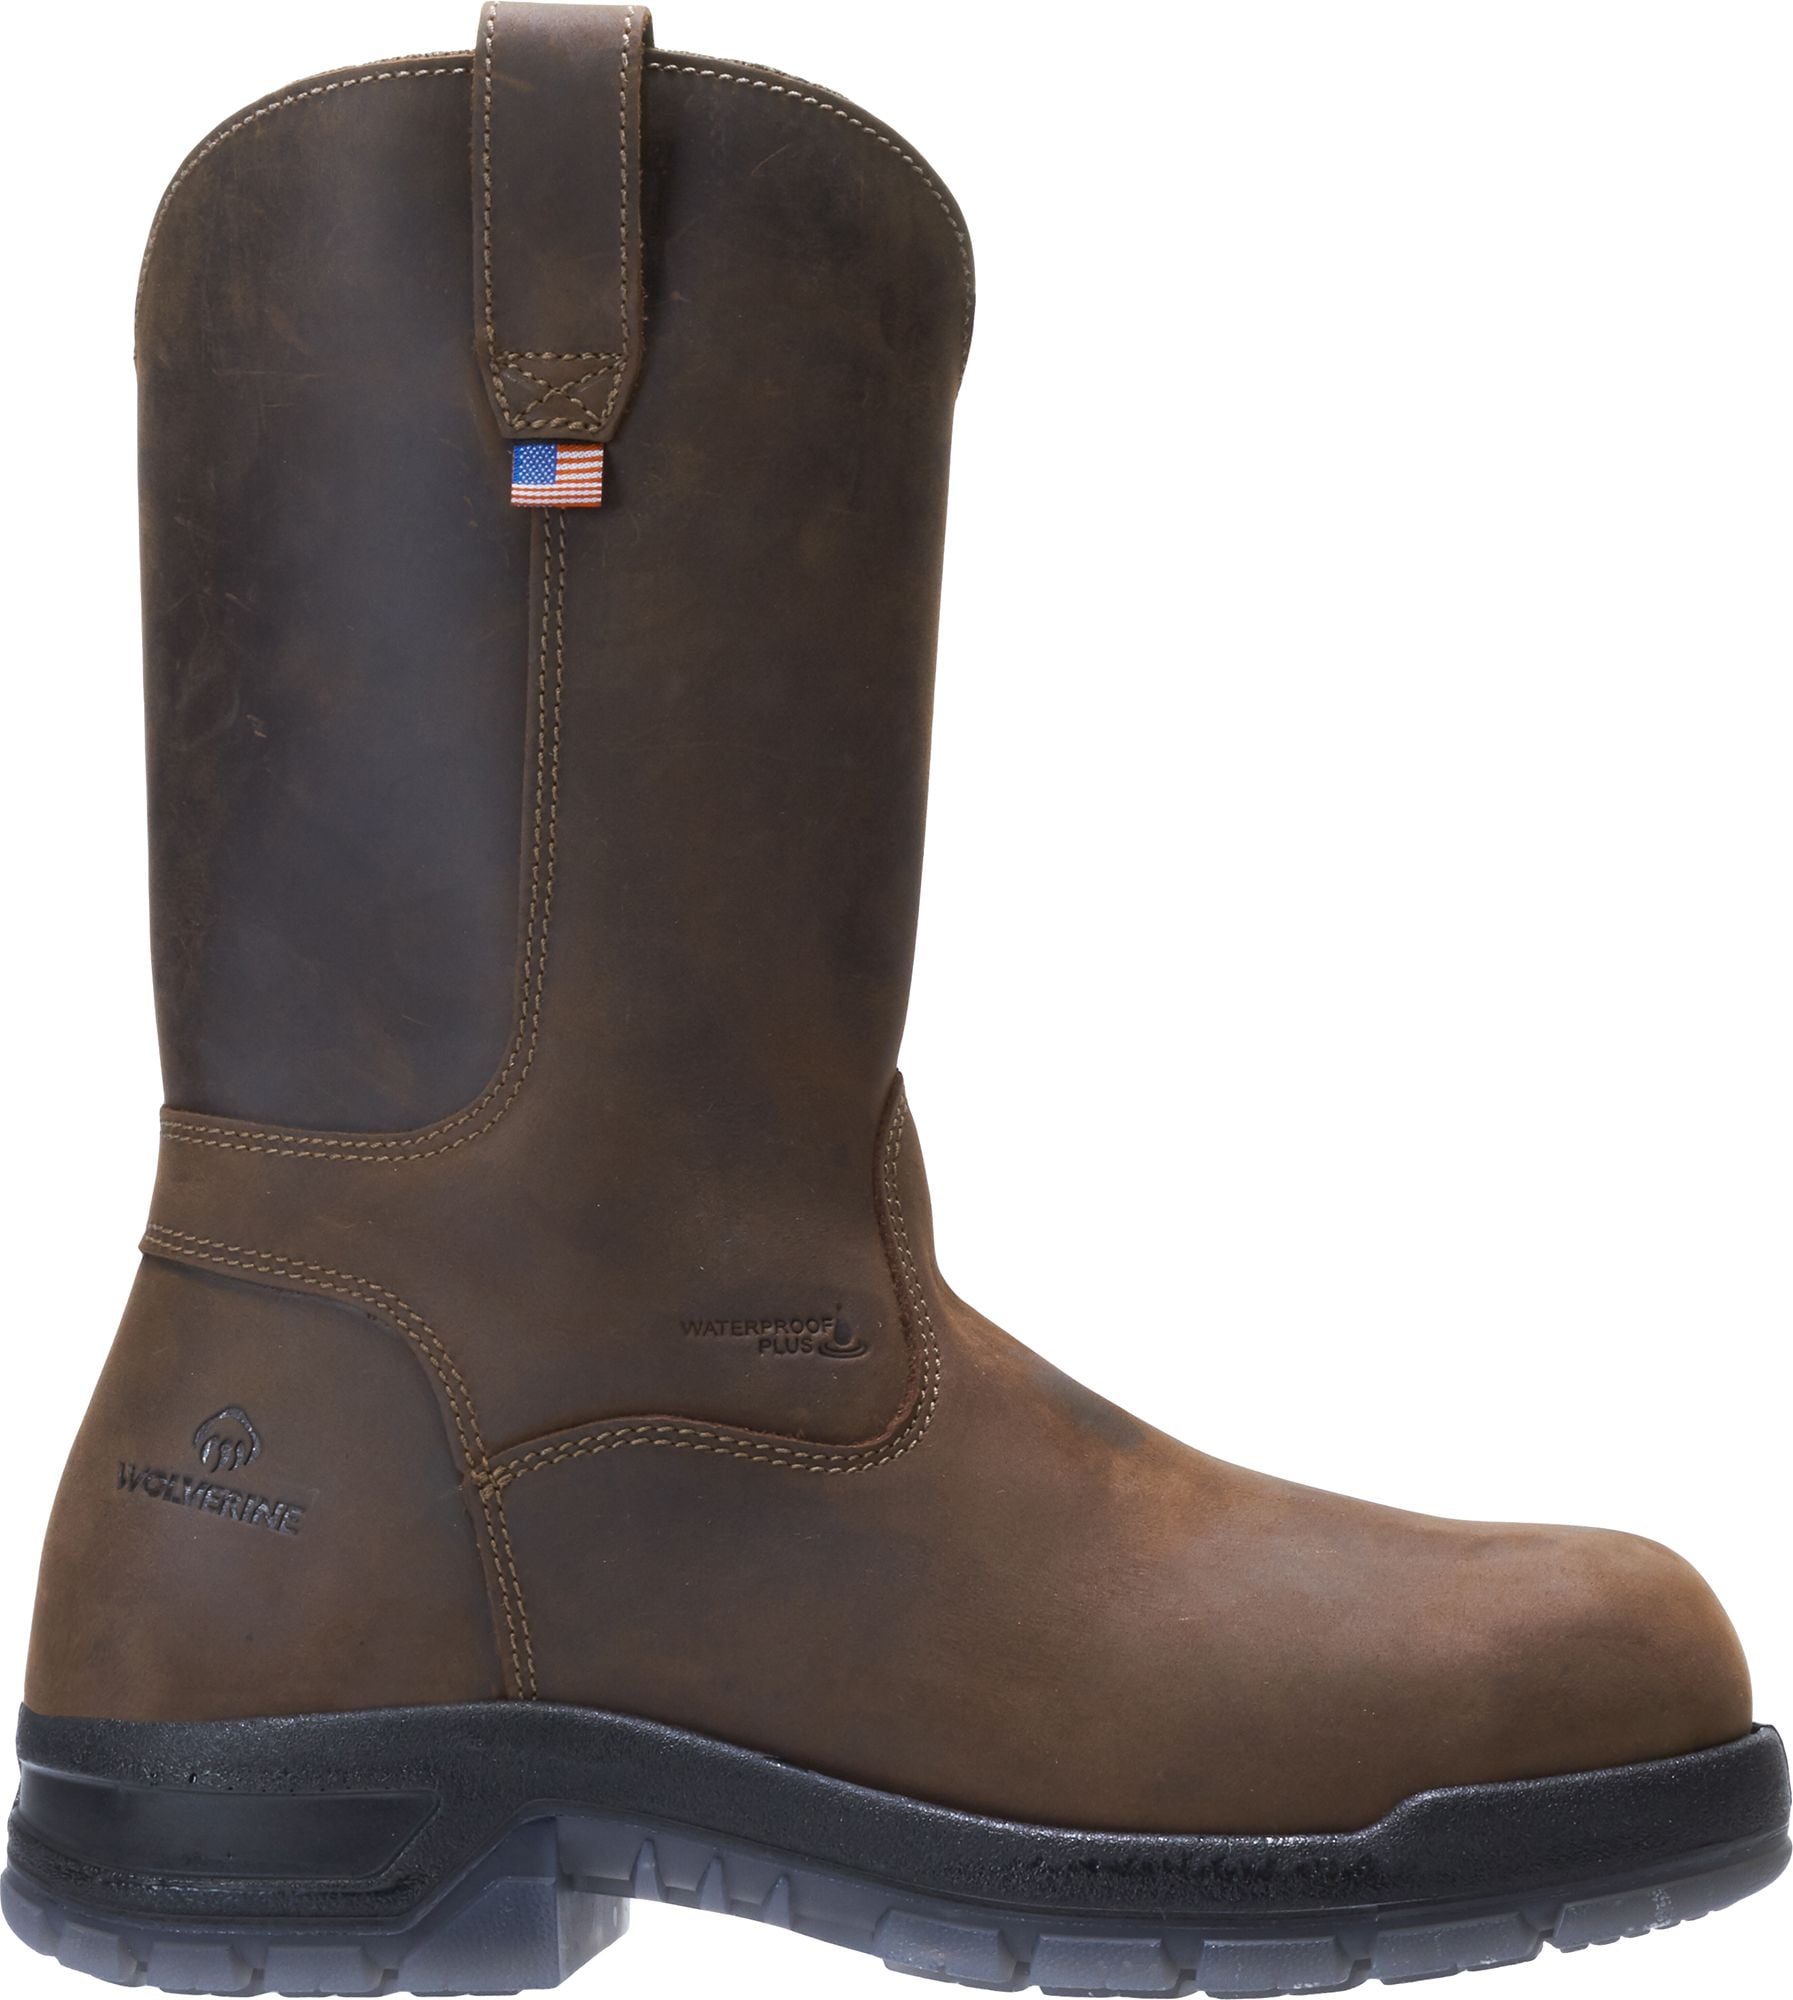 waterproof boots walmart